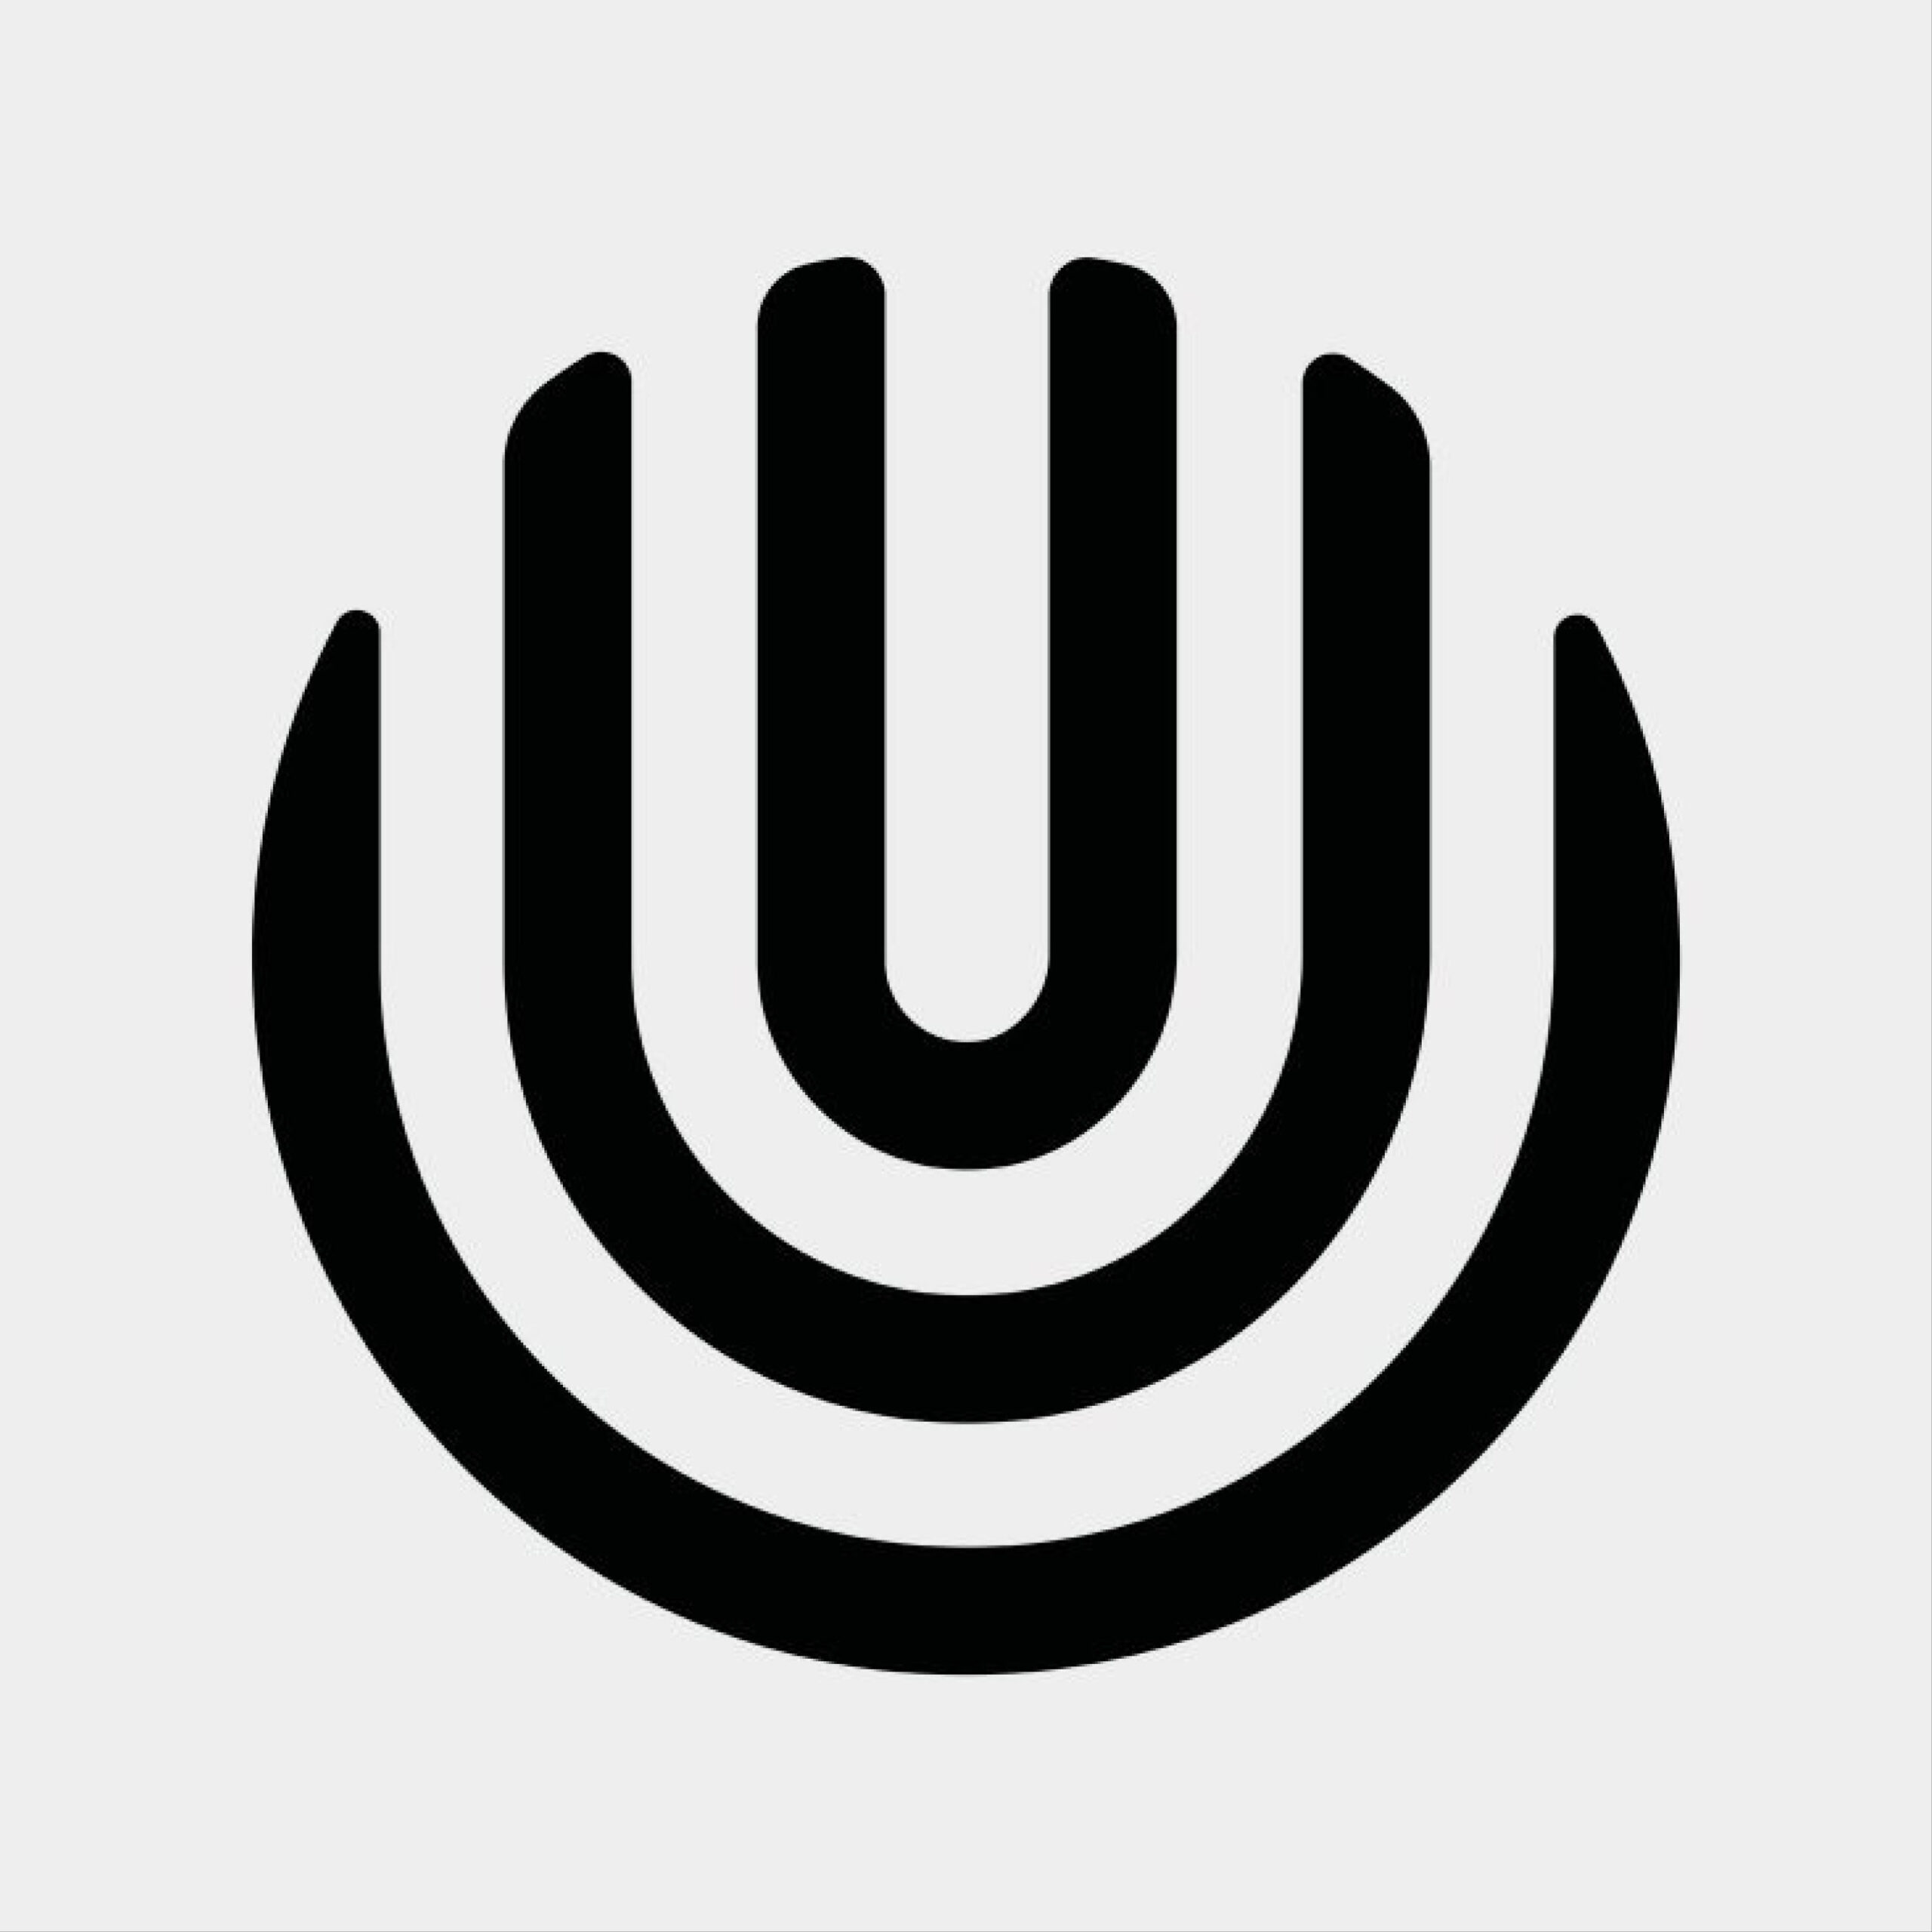 captns - logo visuelle identität massagepraxis ueli kienholz